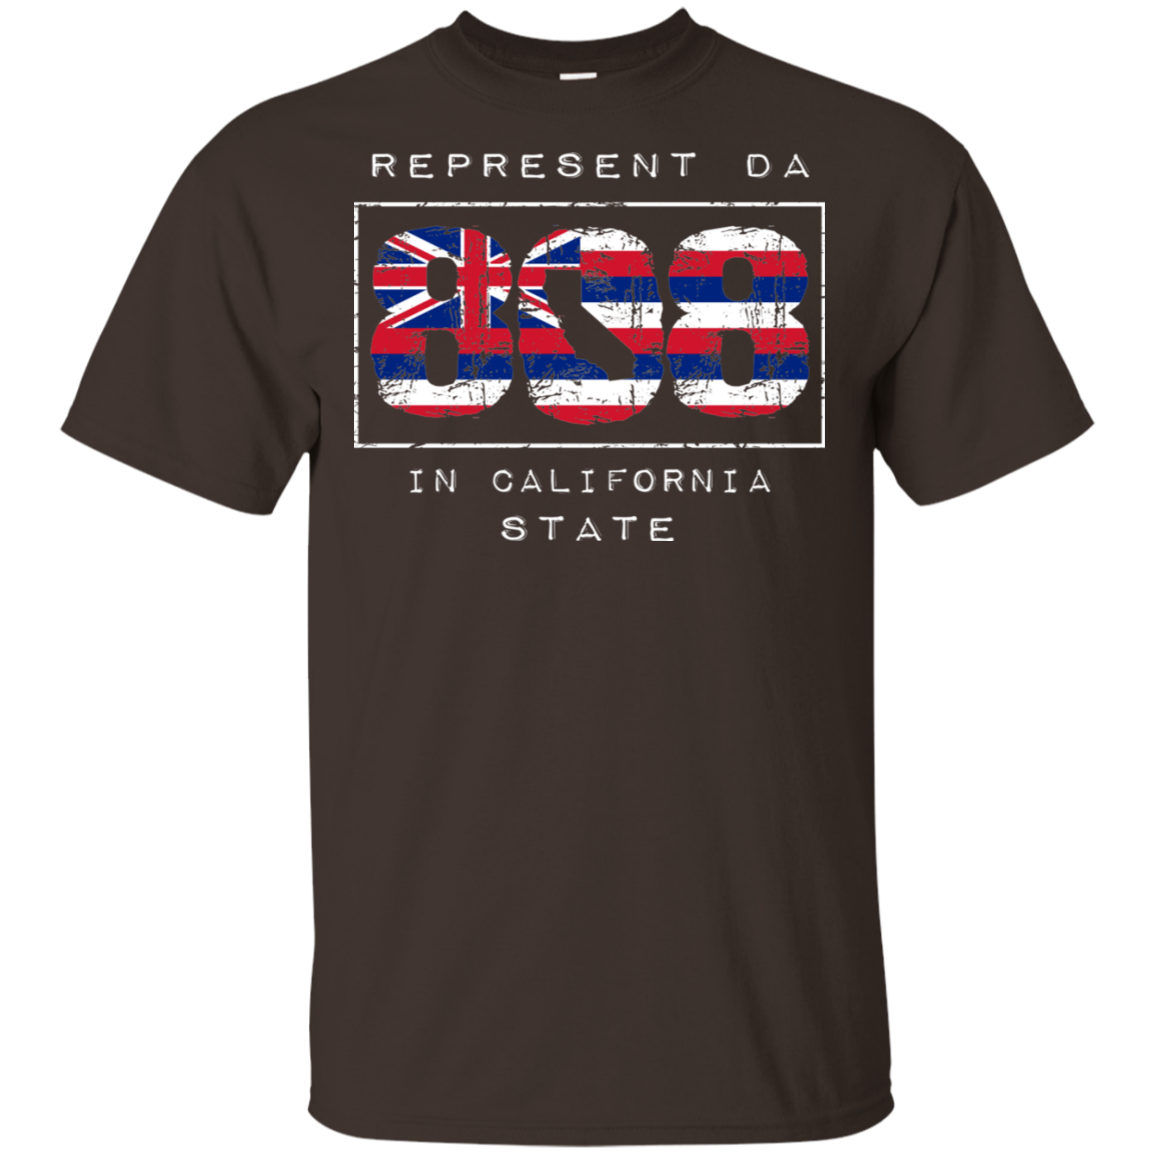 Rep Da 808 In California State Ultra Cotton T-Shirt, T-Shirts, Hawaii Nei All Day